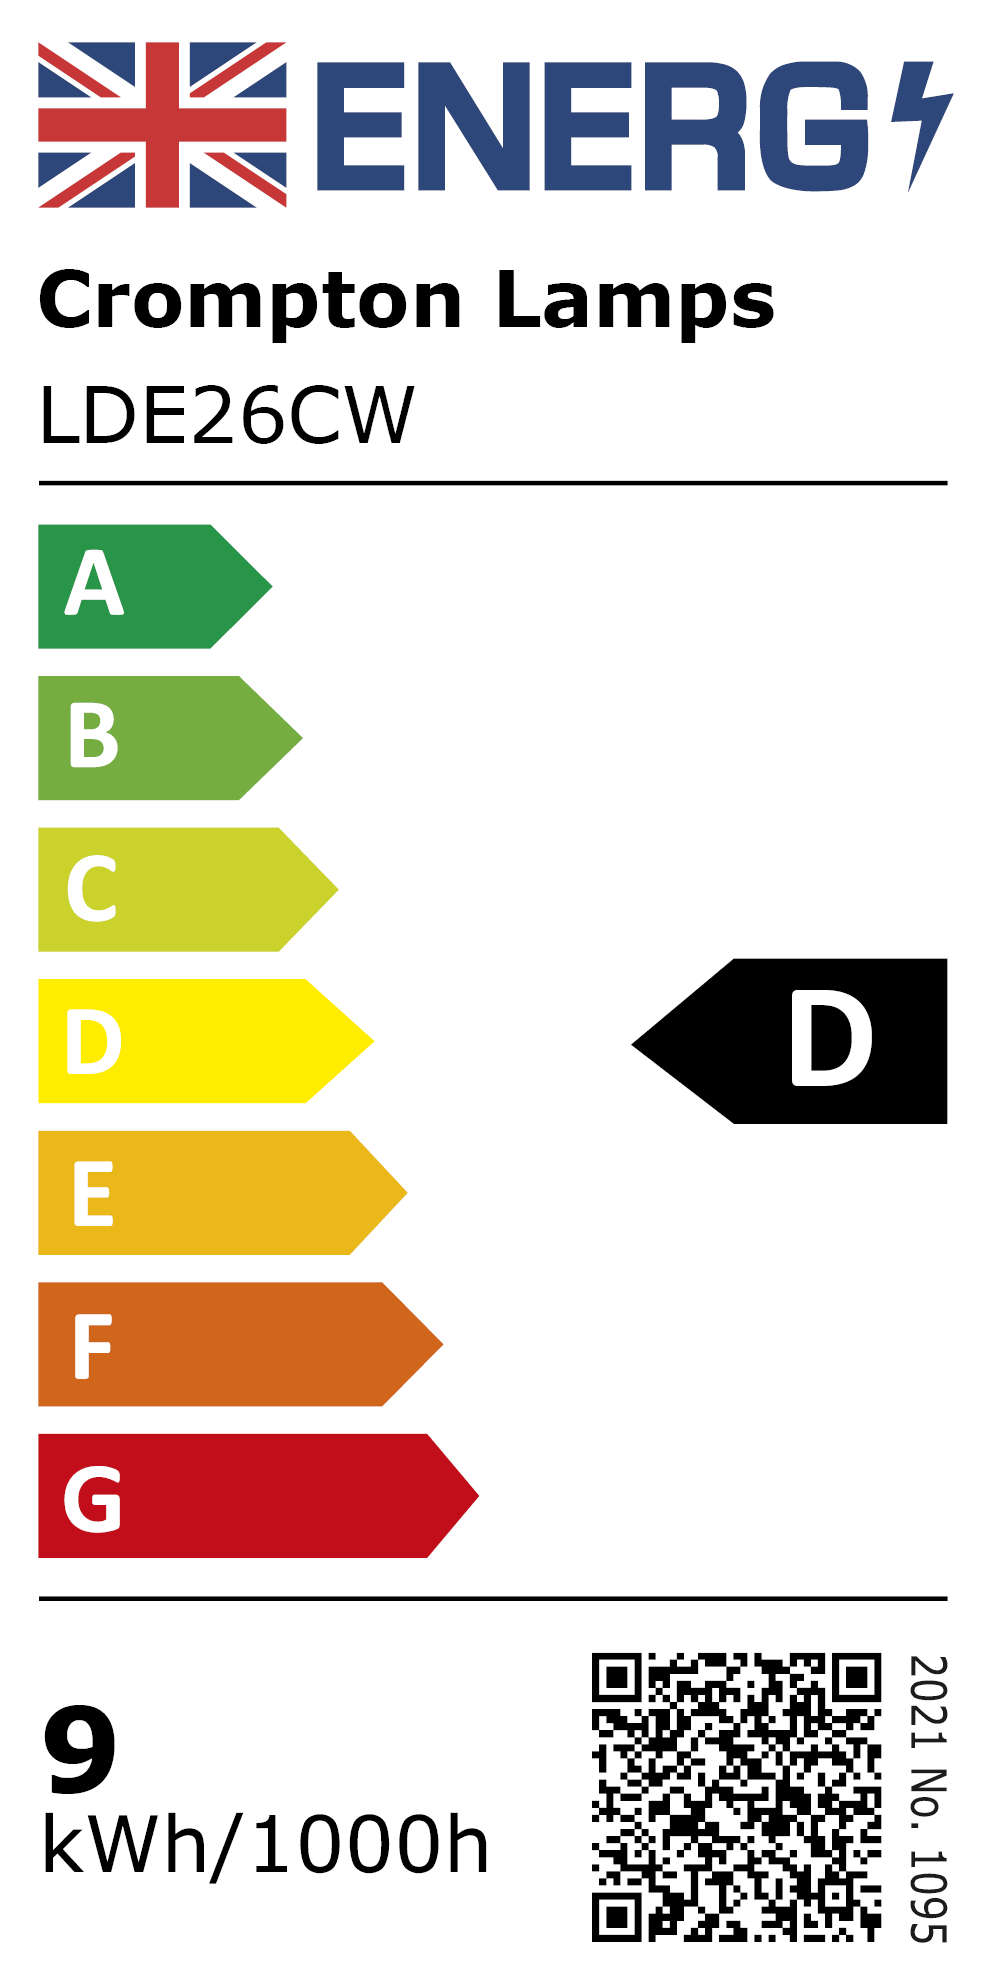 New 2021 Energy Rating Label: MPN LDE26CW